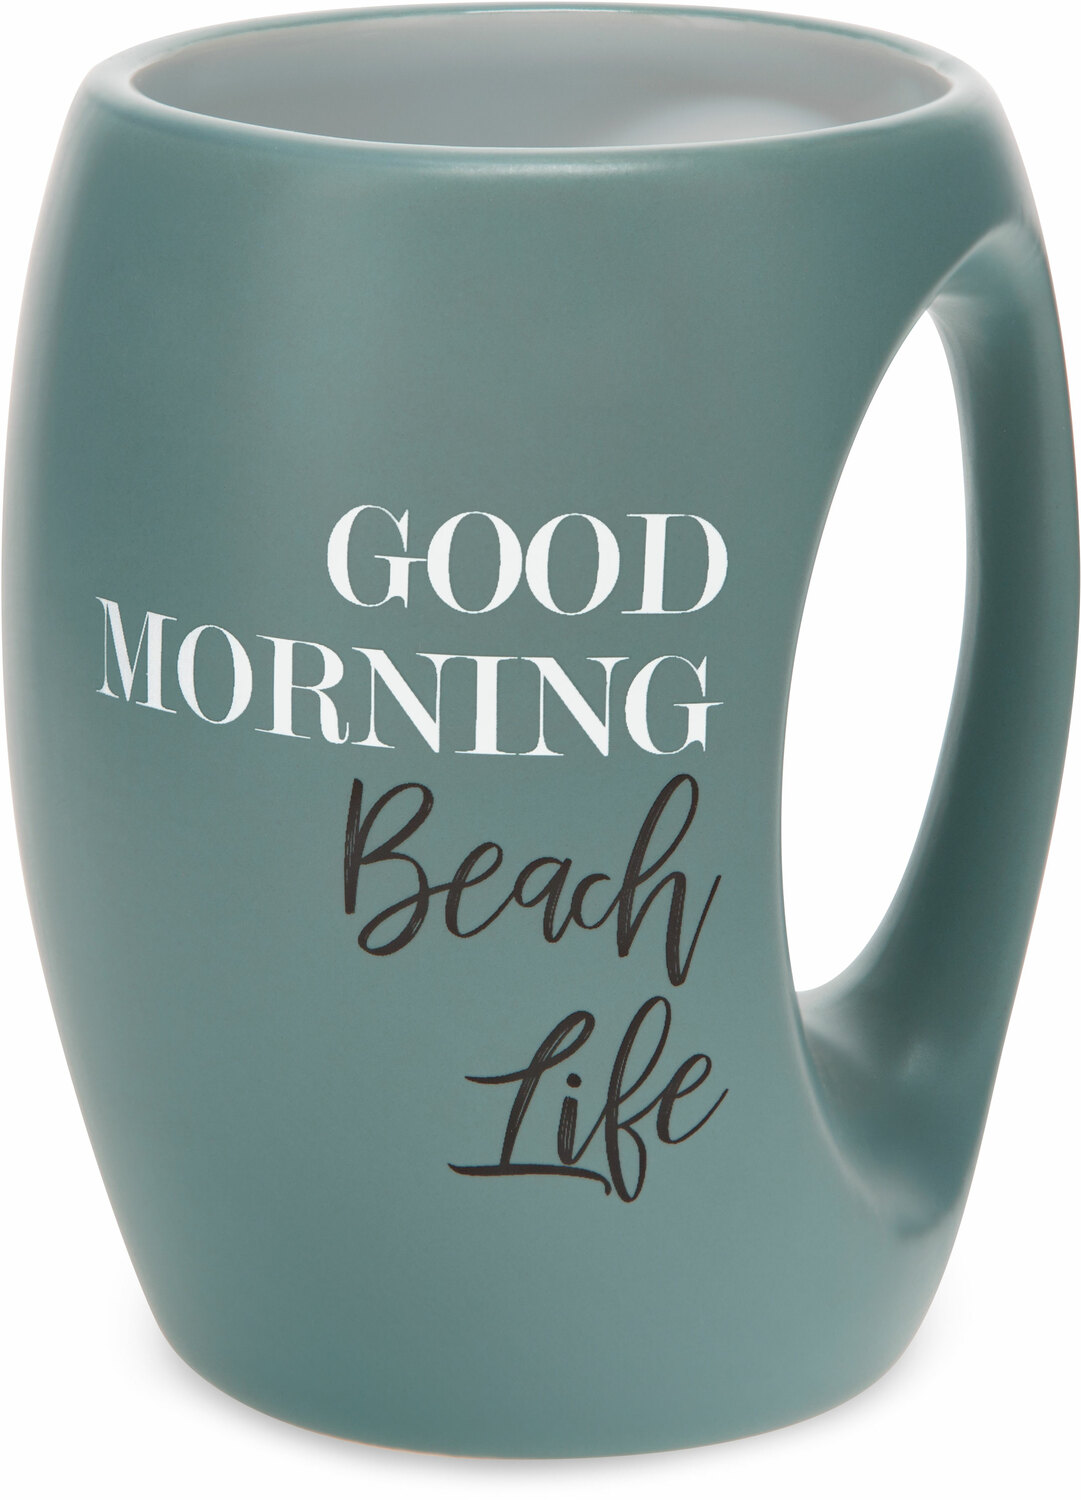 Beach Life by Good Morning - Beach Life - 16 oz Cup